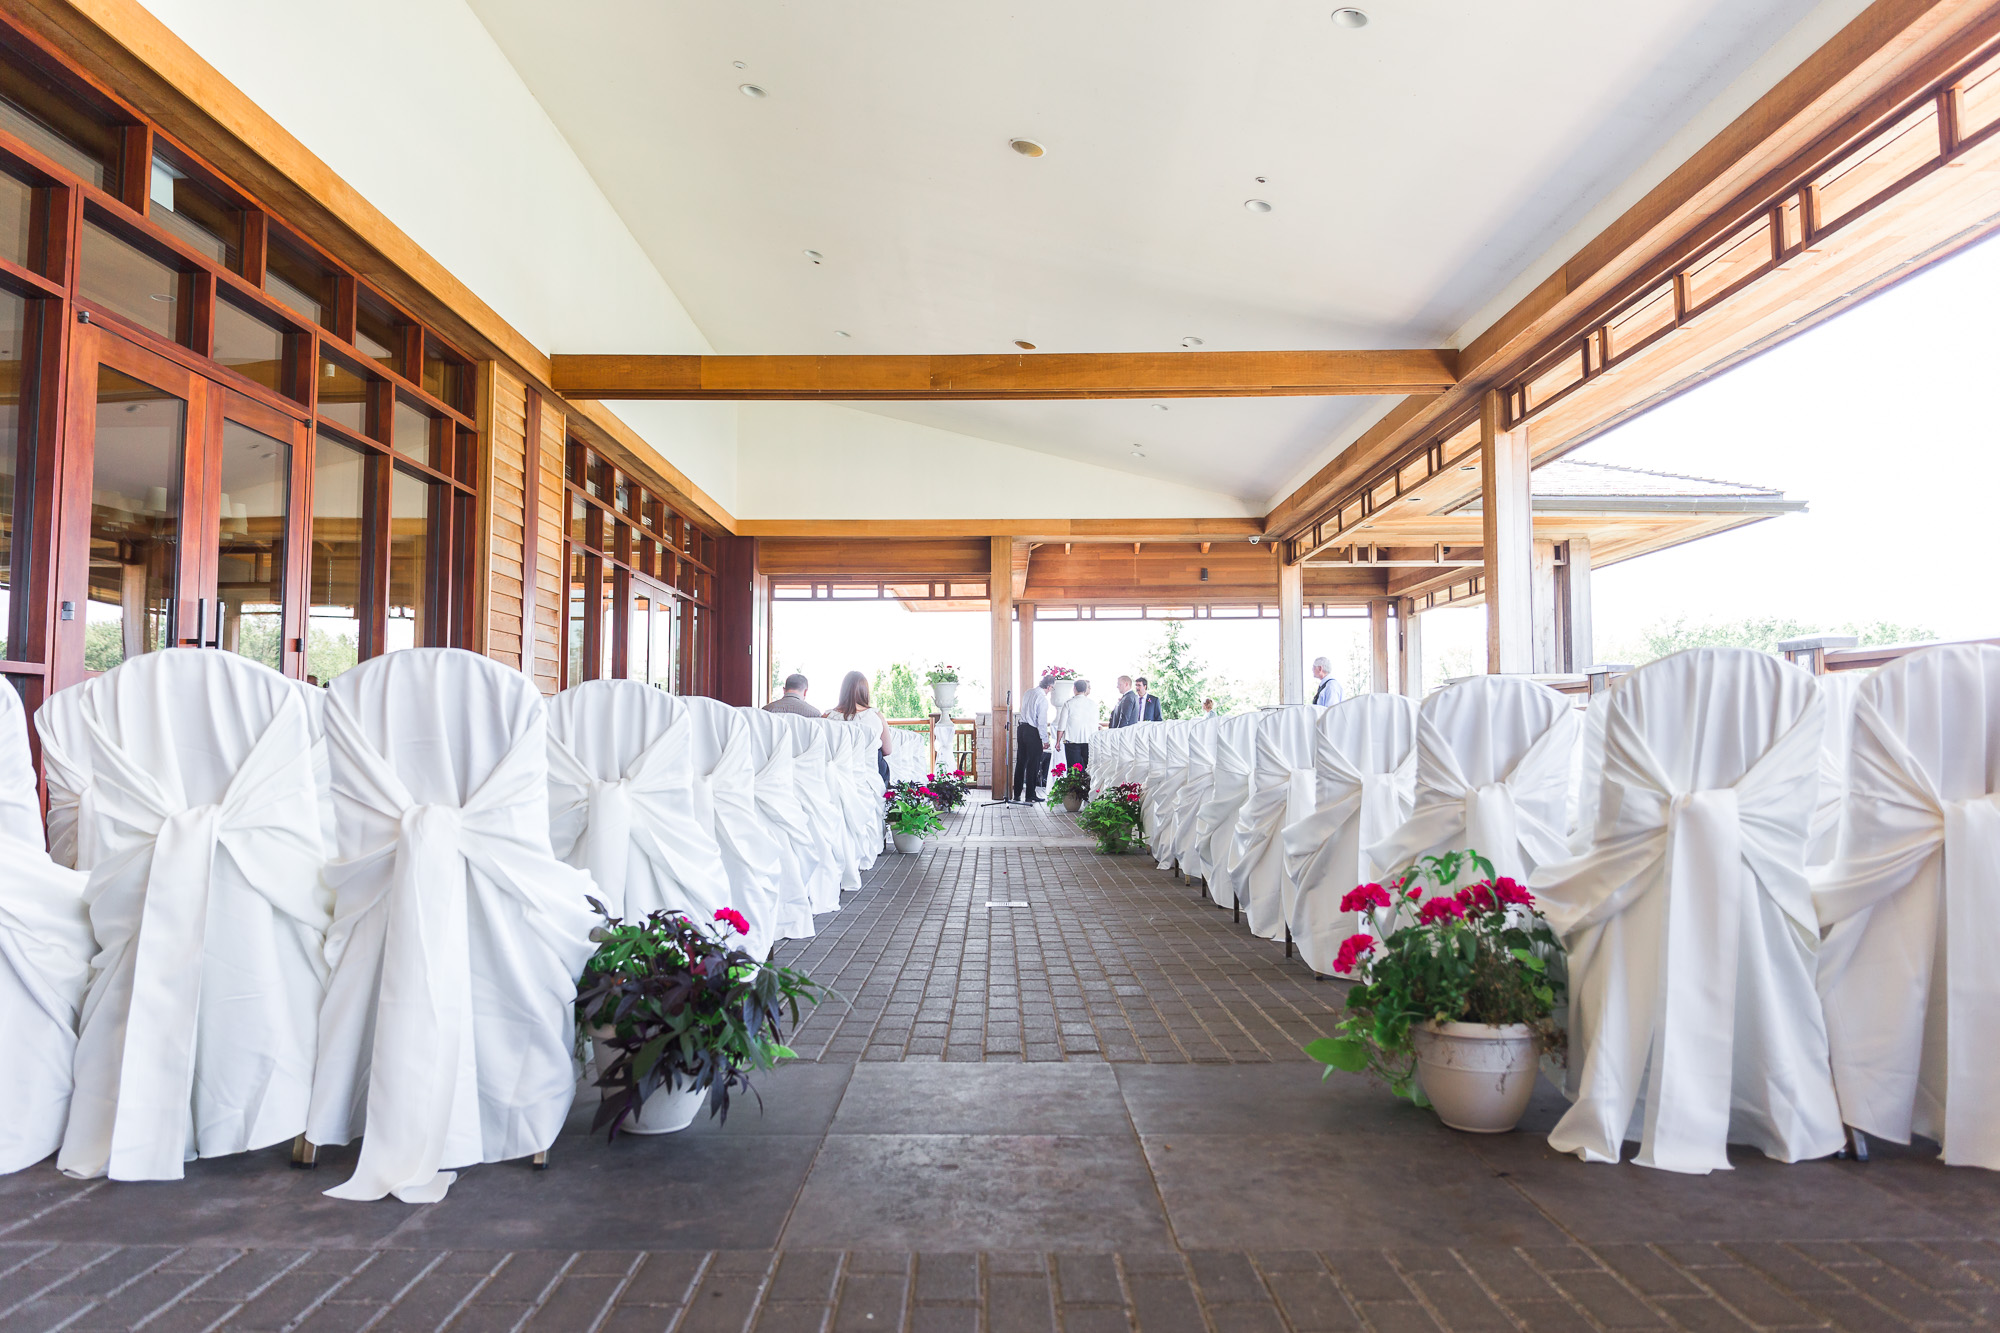 Choosing the right wedding venue